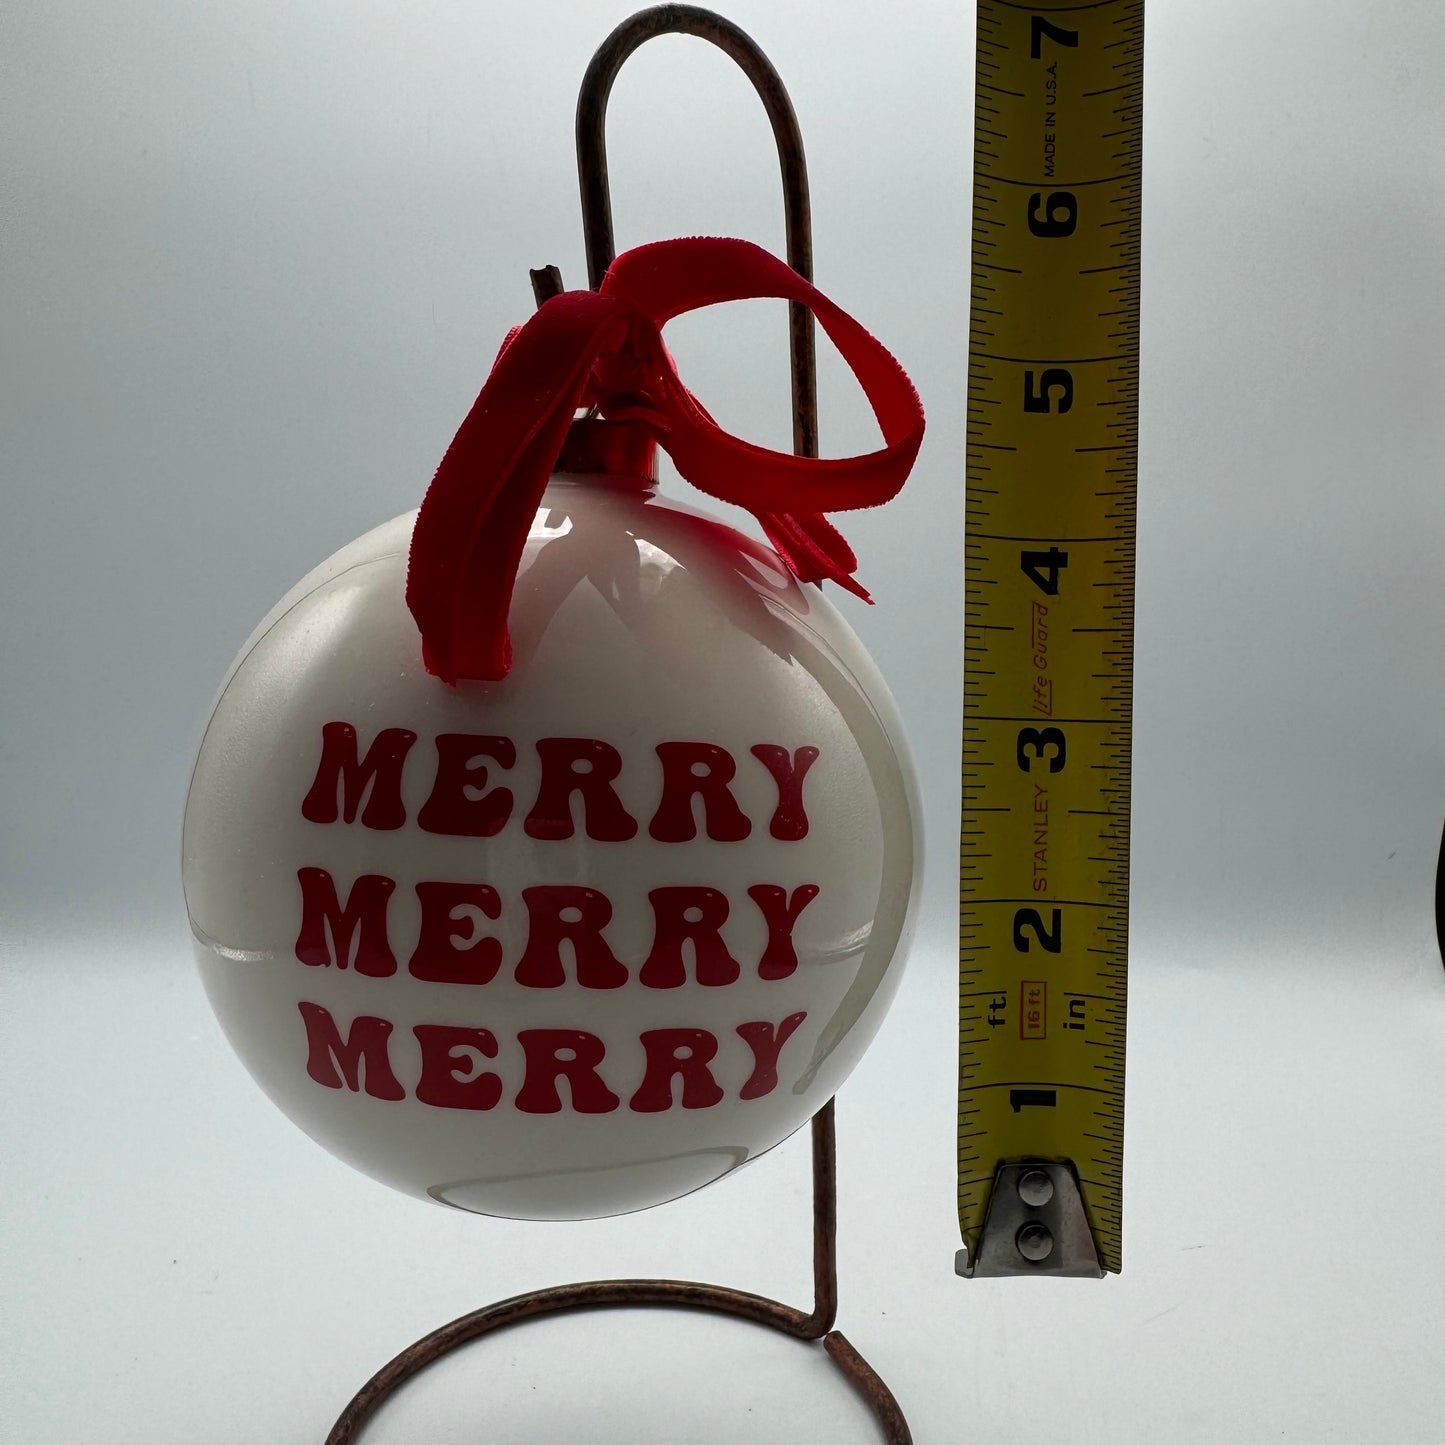 "Merry Merry Merry" Ceramic Christmas Tree Ball Ornament